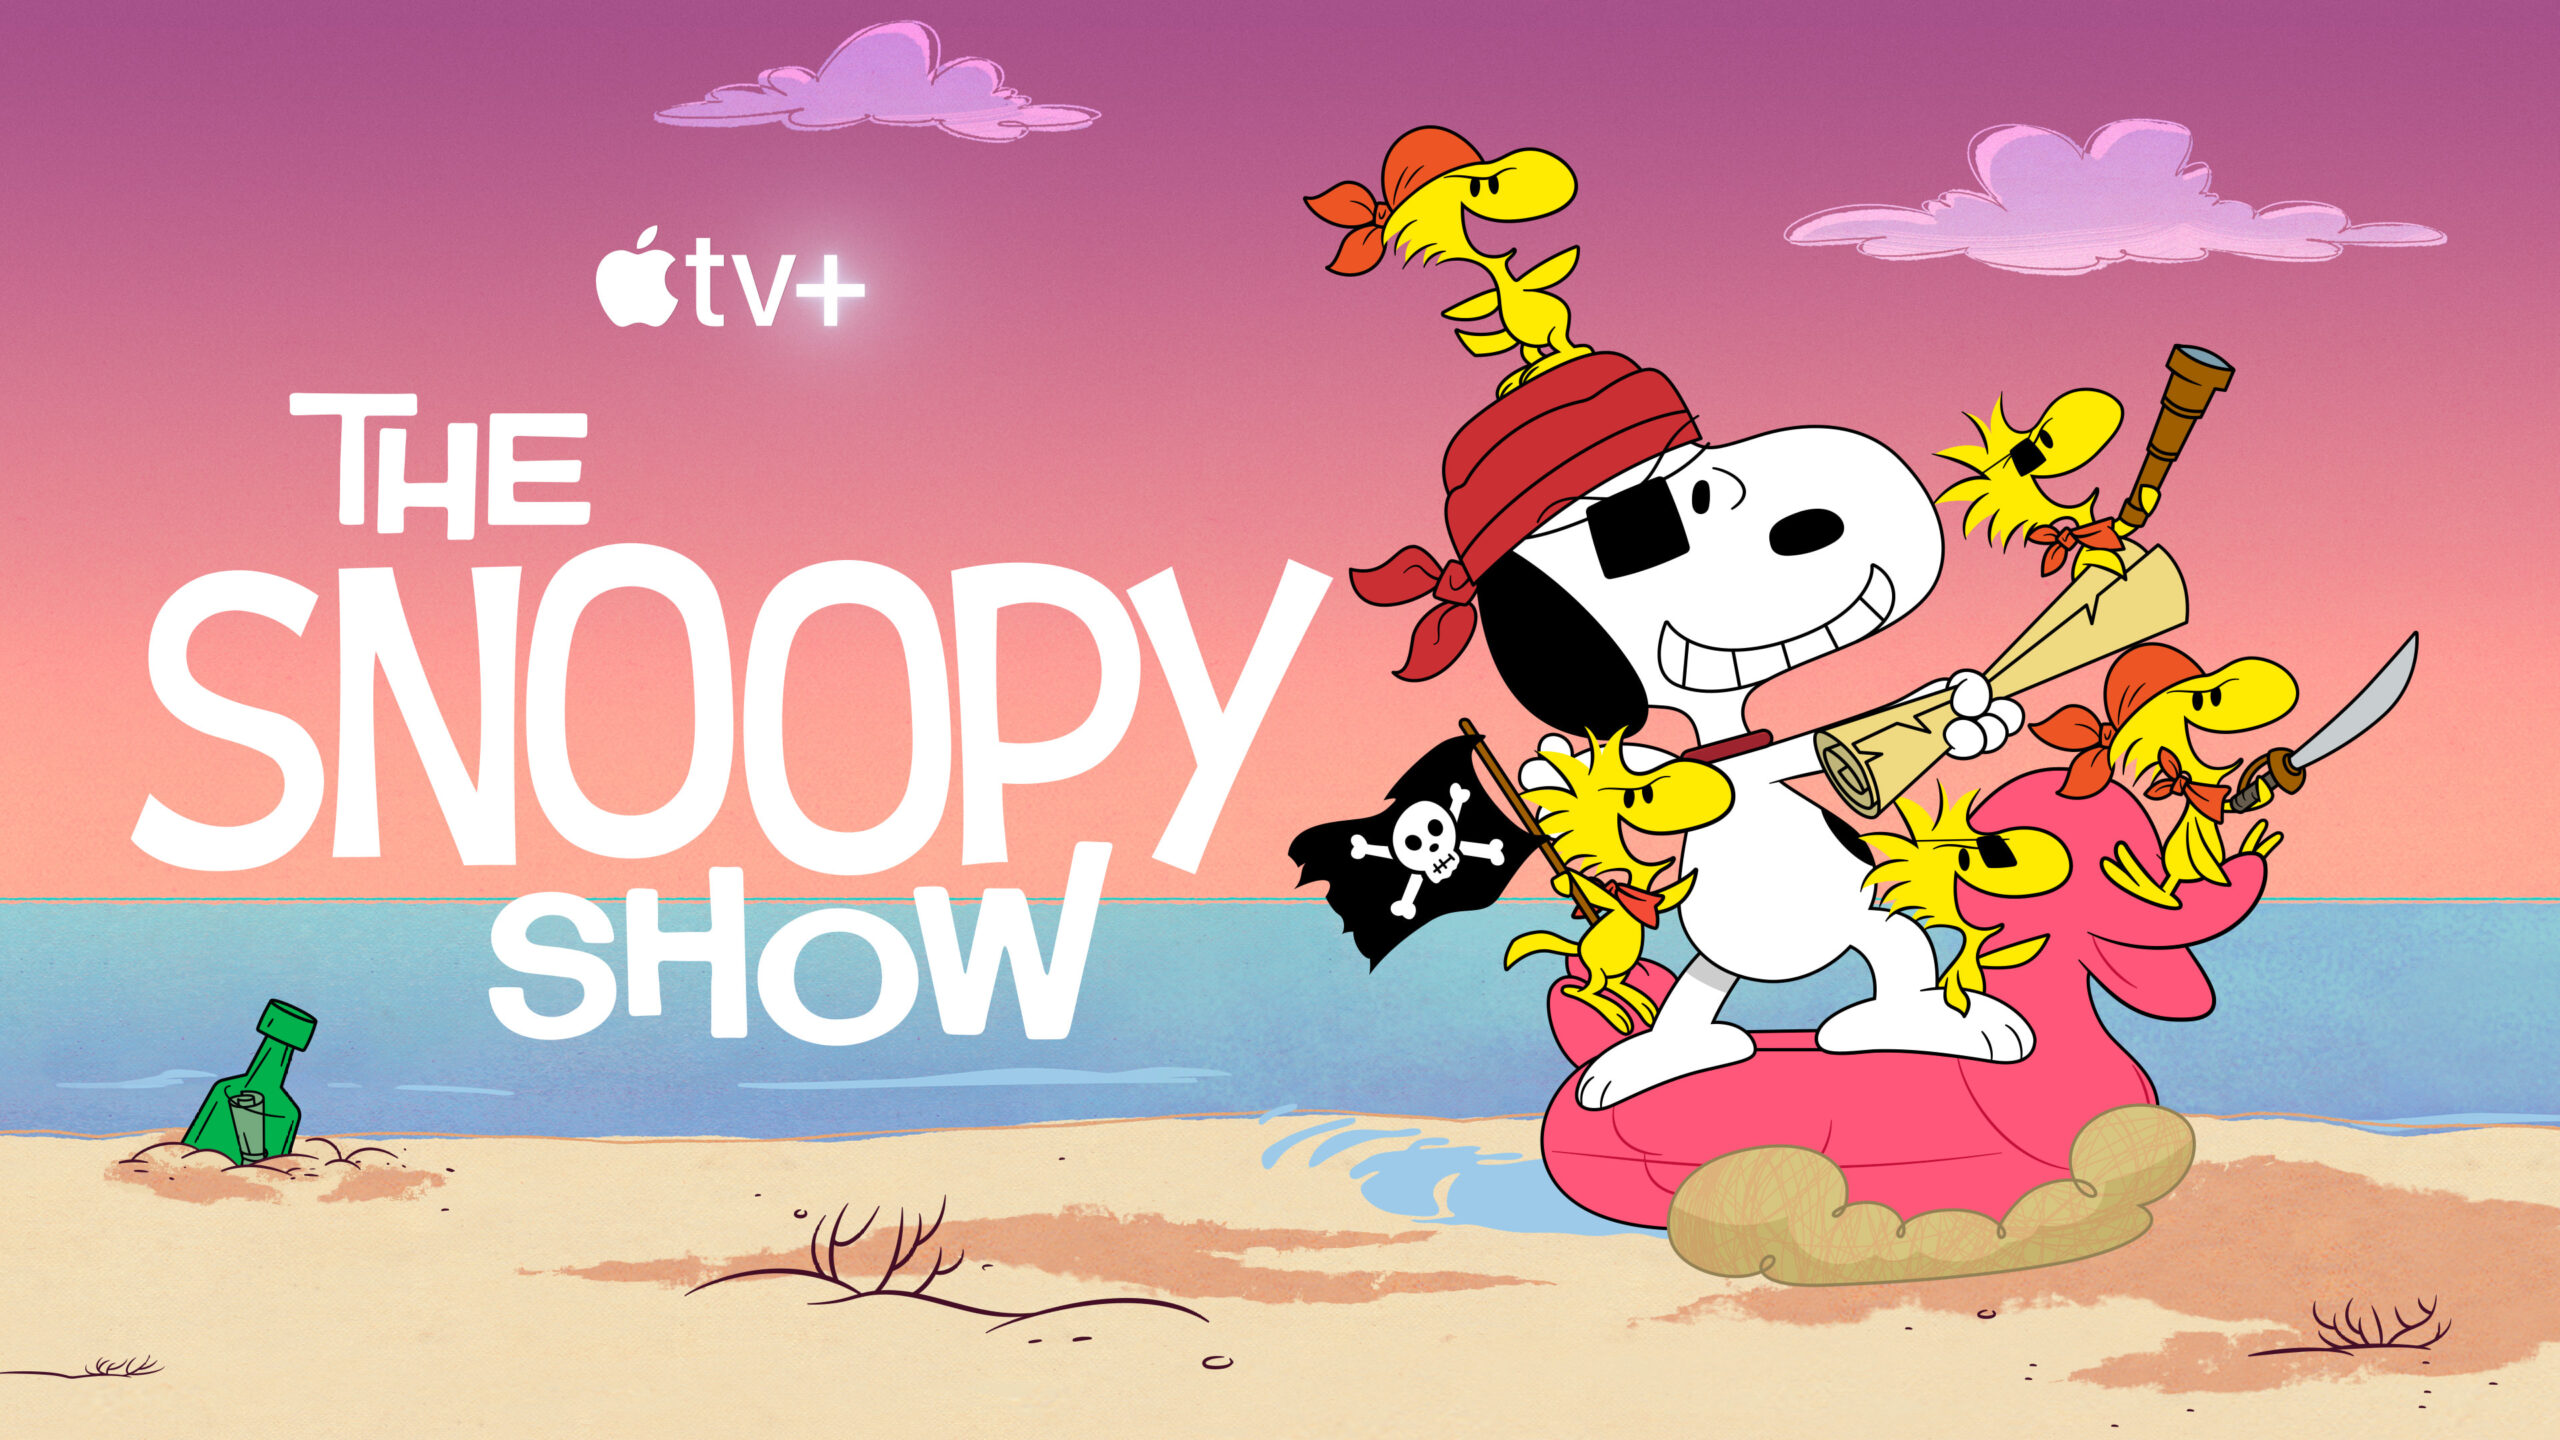 Original Peanuts series “The Snoopy Show”